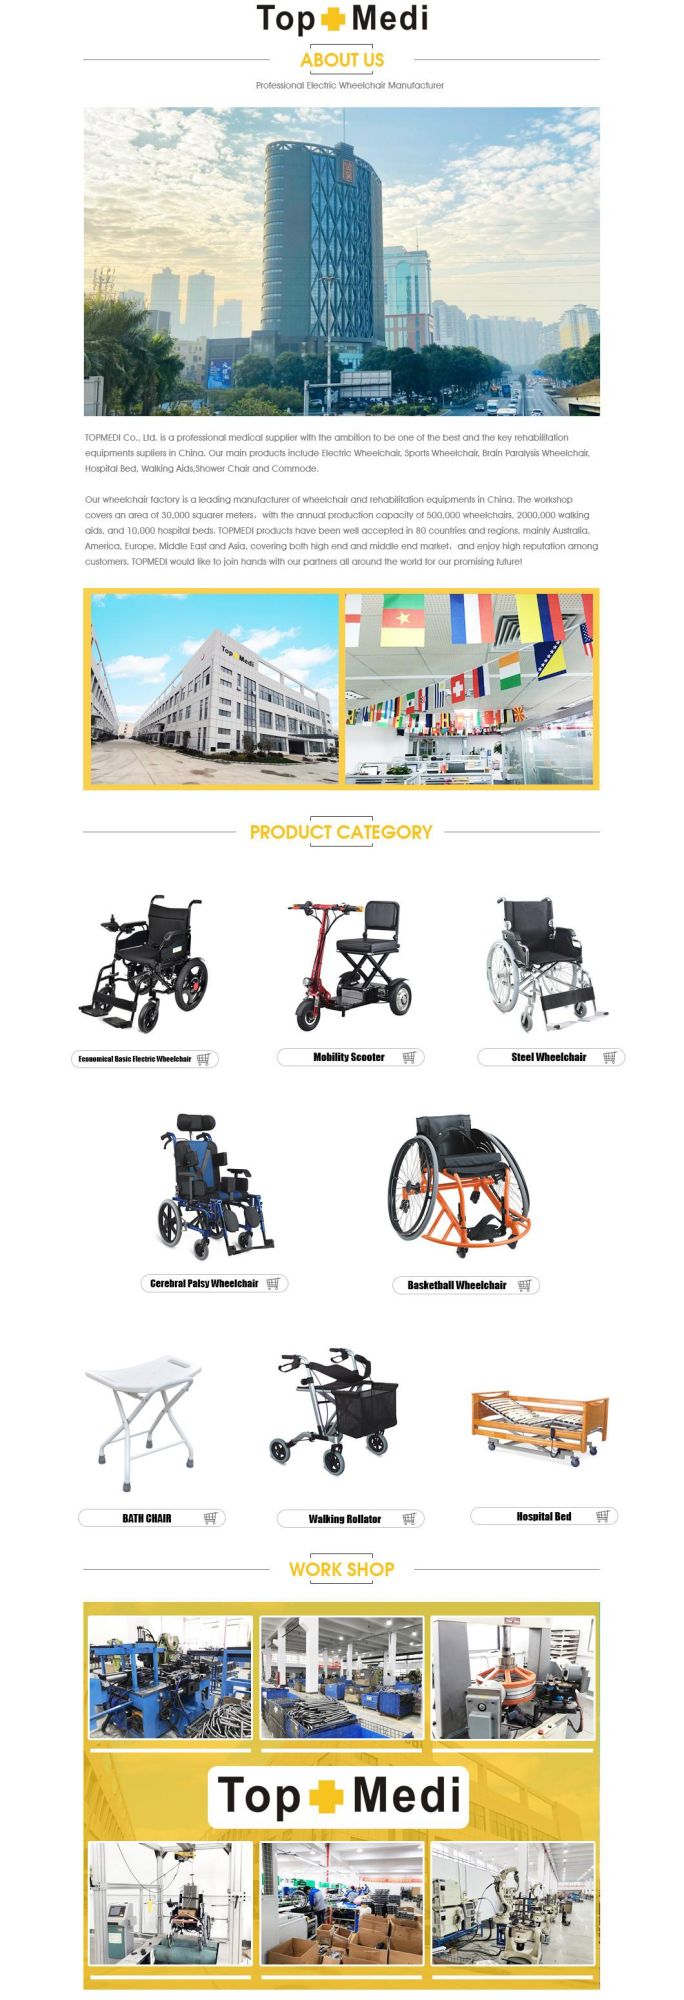 PU Rear Wheel Reclining High Back Lightweight Active Wheelchair with Backrest